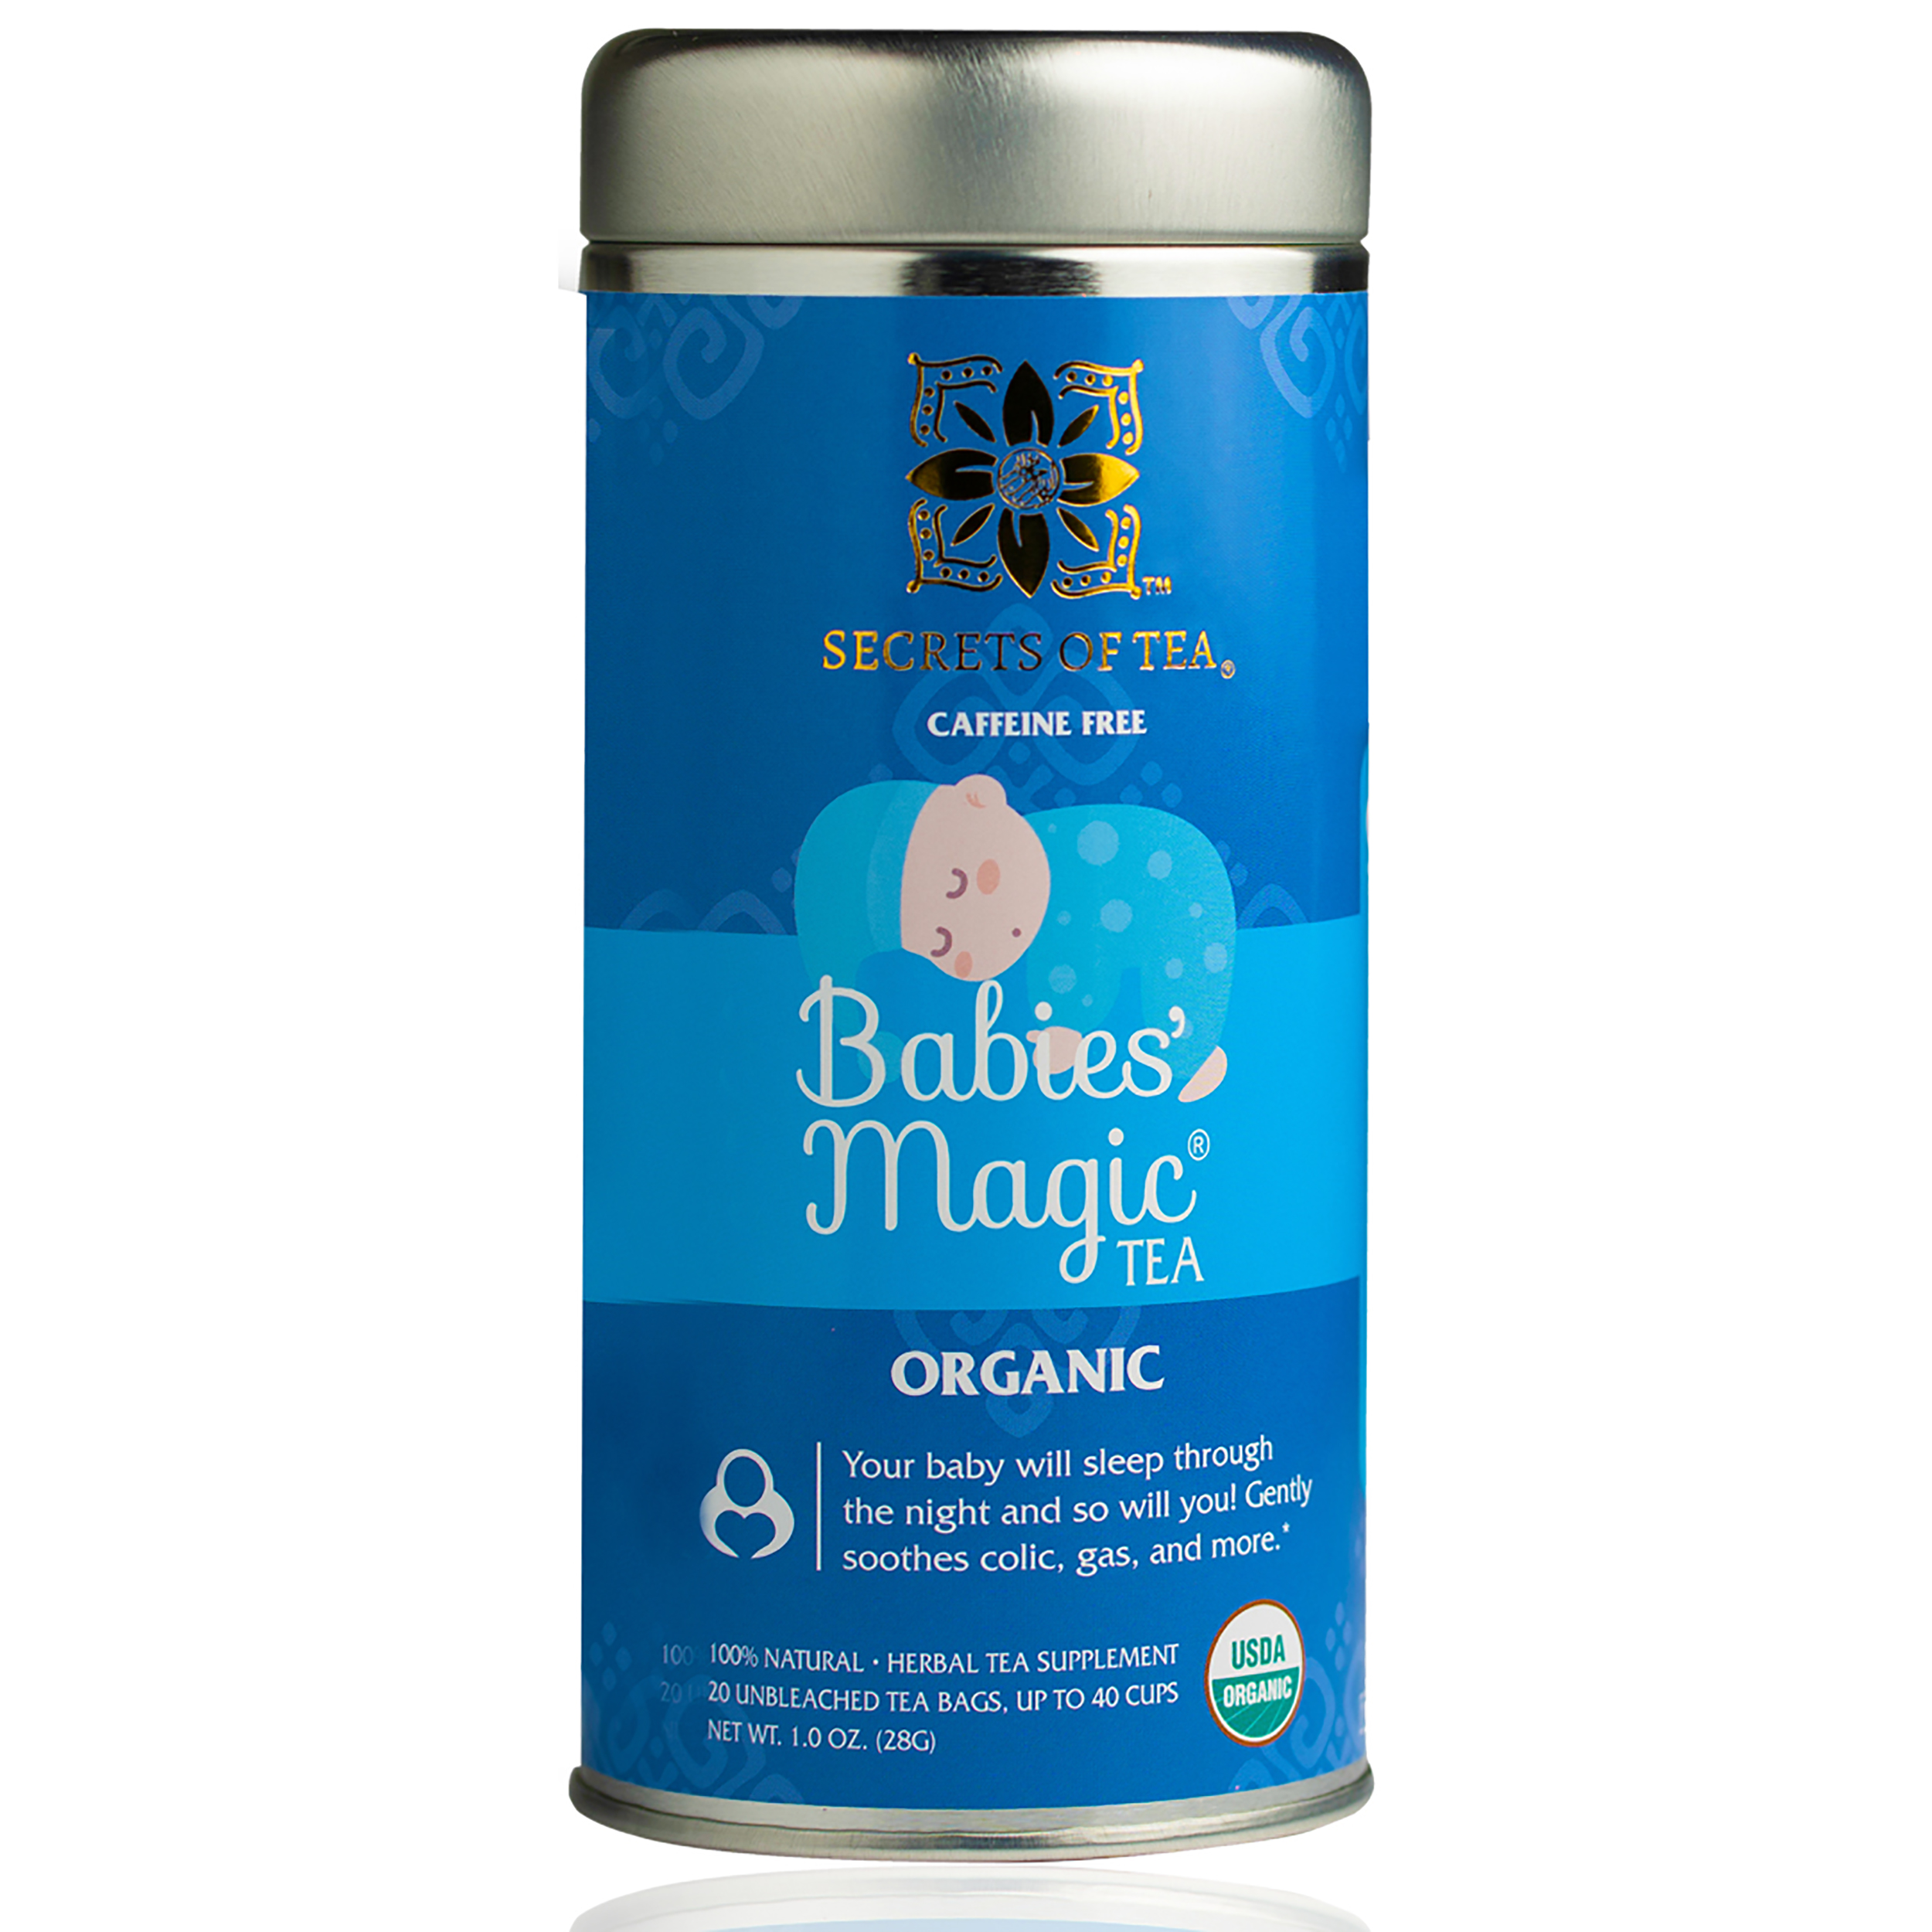 Secrets of Tea Baby Magic Tea 4 innerpacks per case 2.0 oz